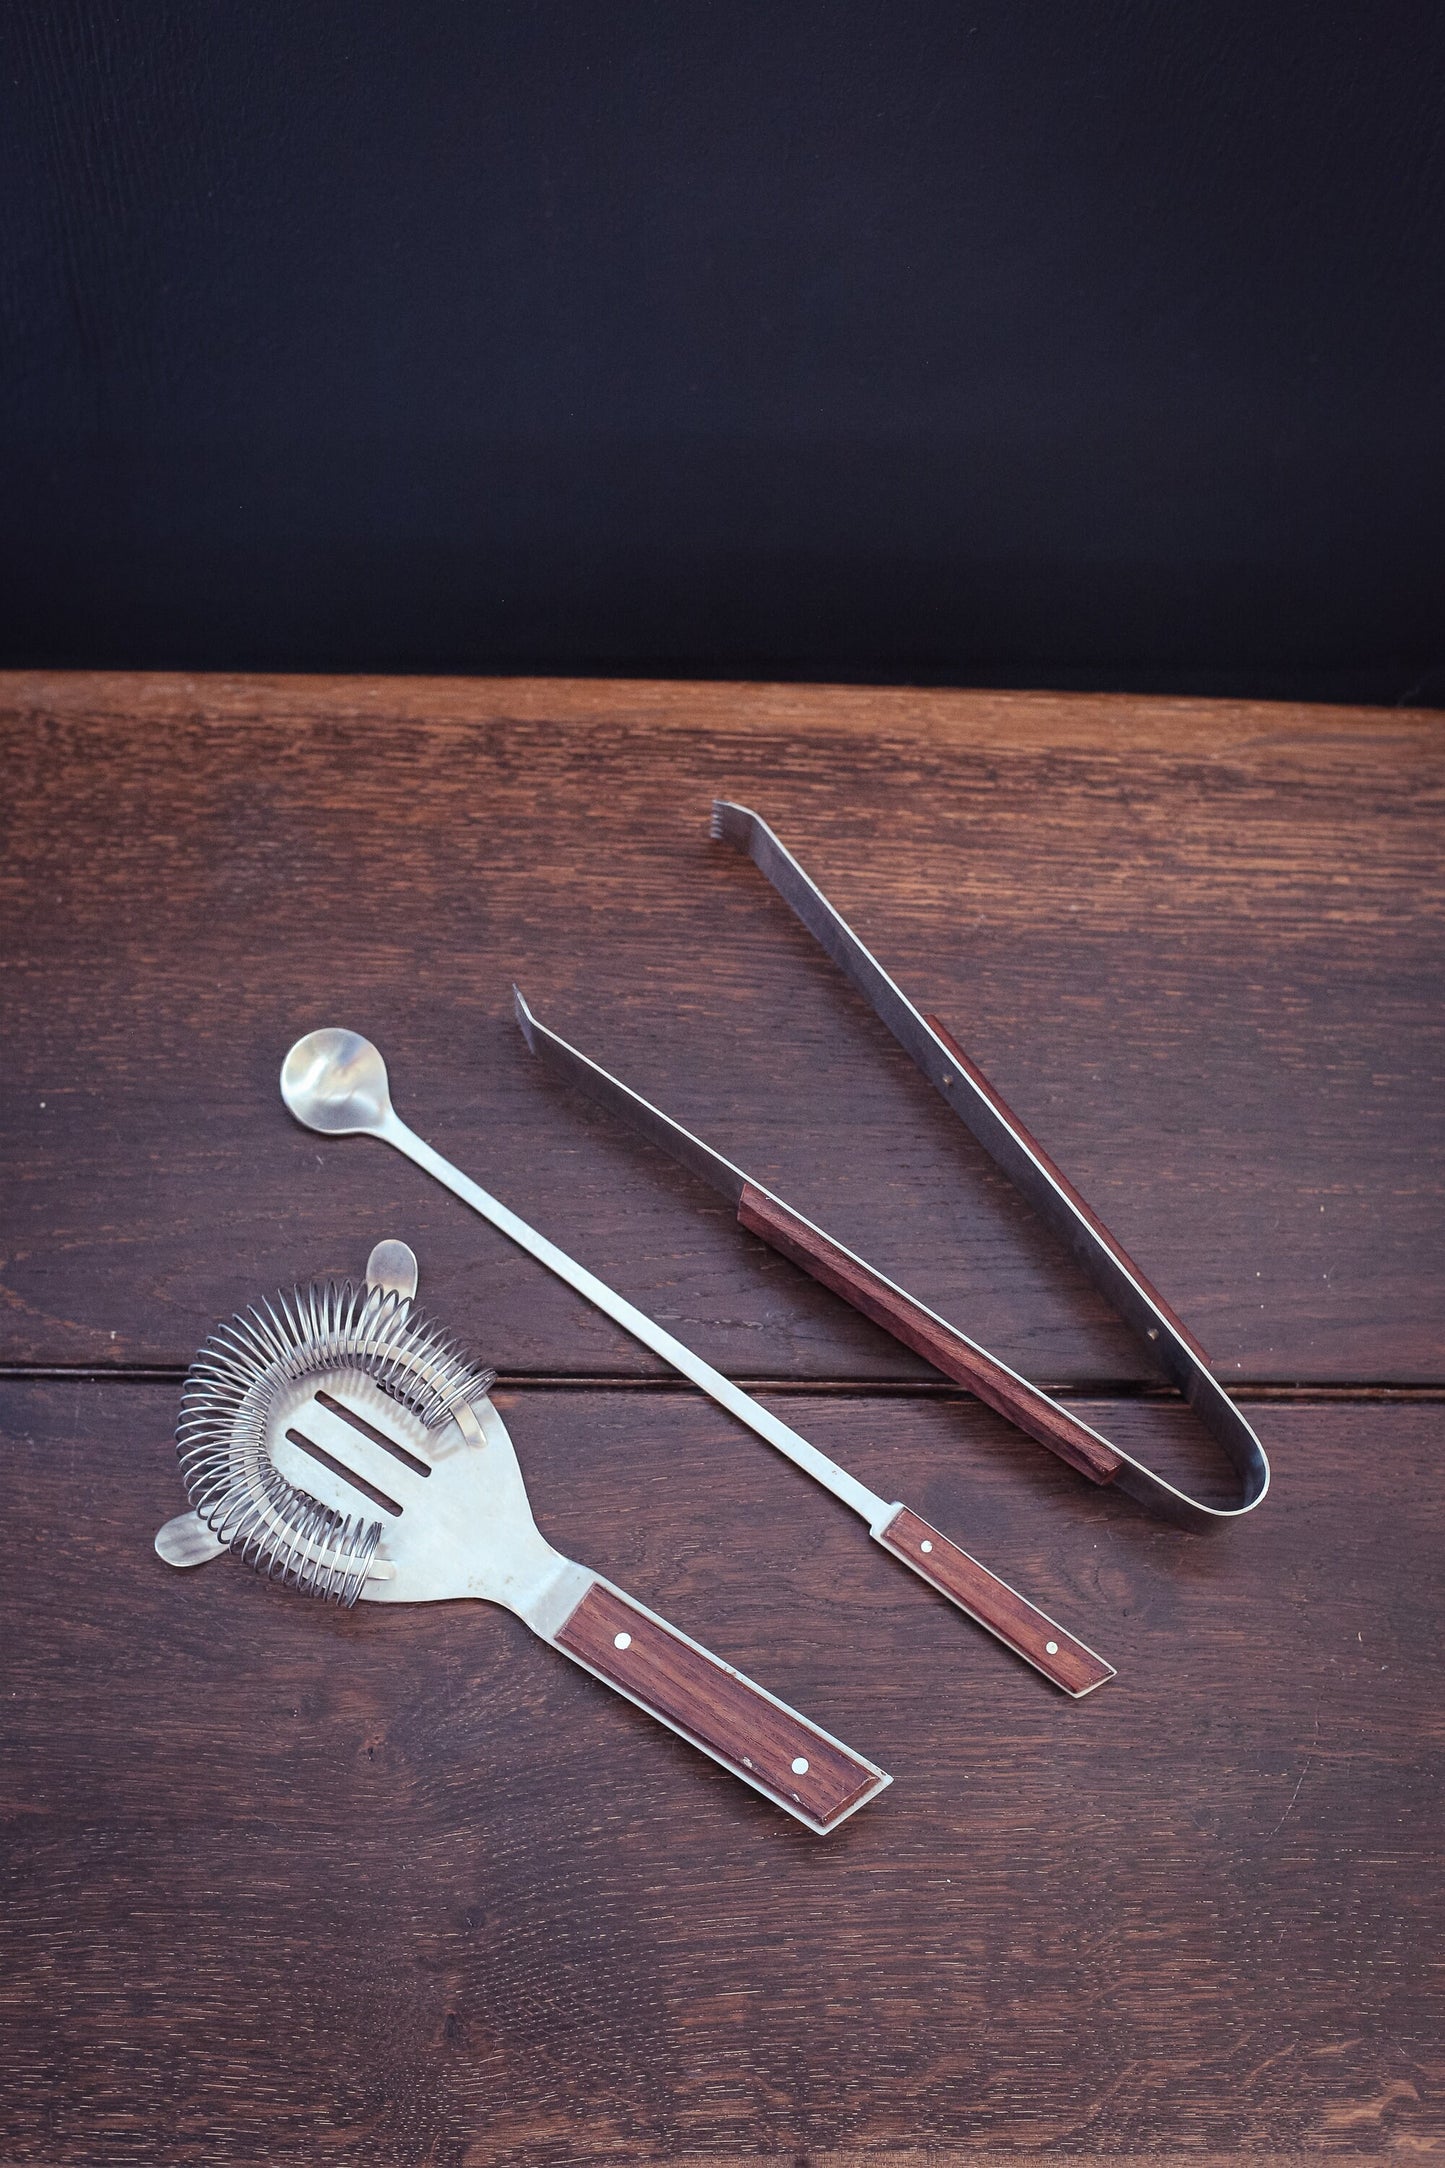 Japanese Steel and Rosewood Bar Tools set of 3 - Vintage Midcentury Modern Bar Tools Made in Japan